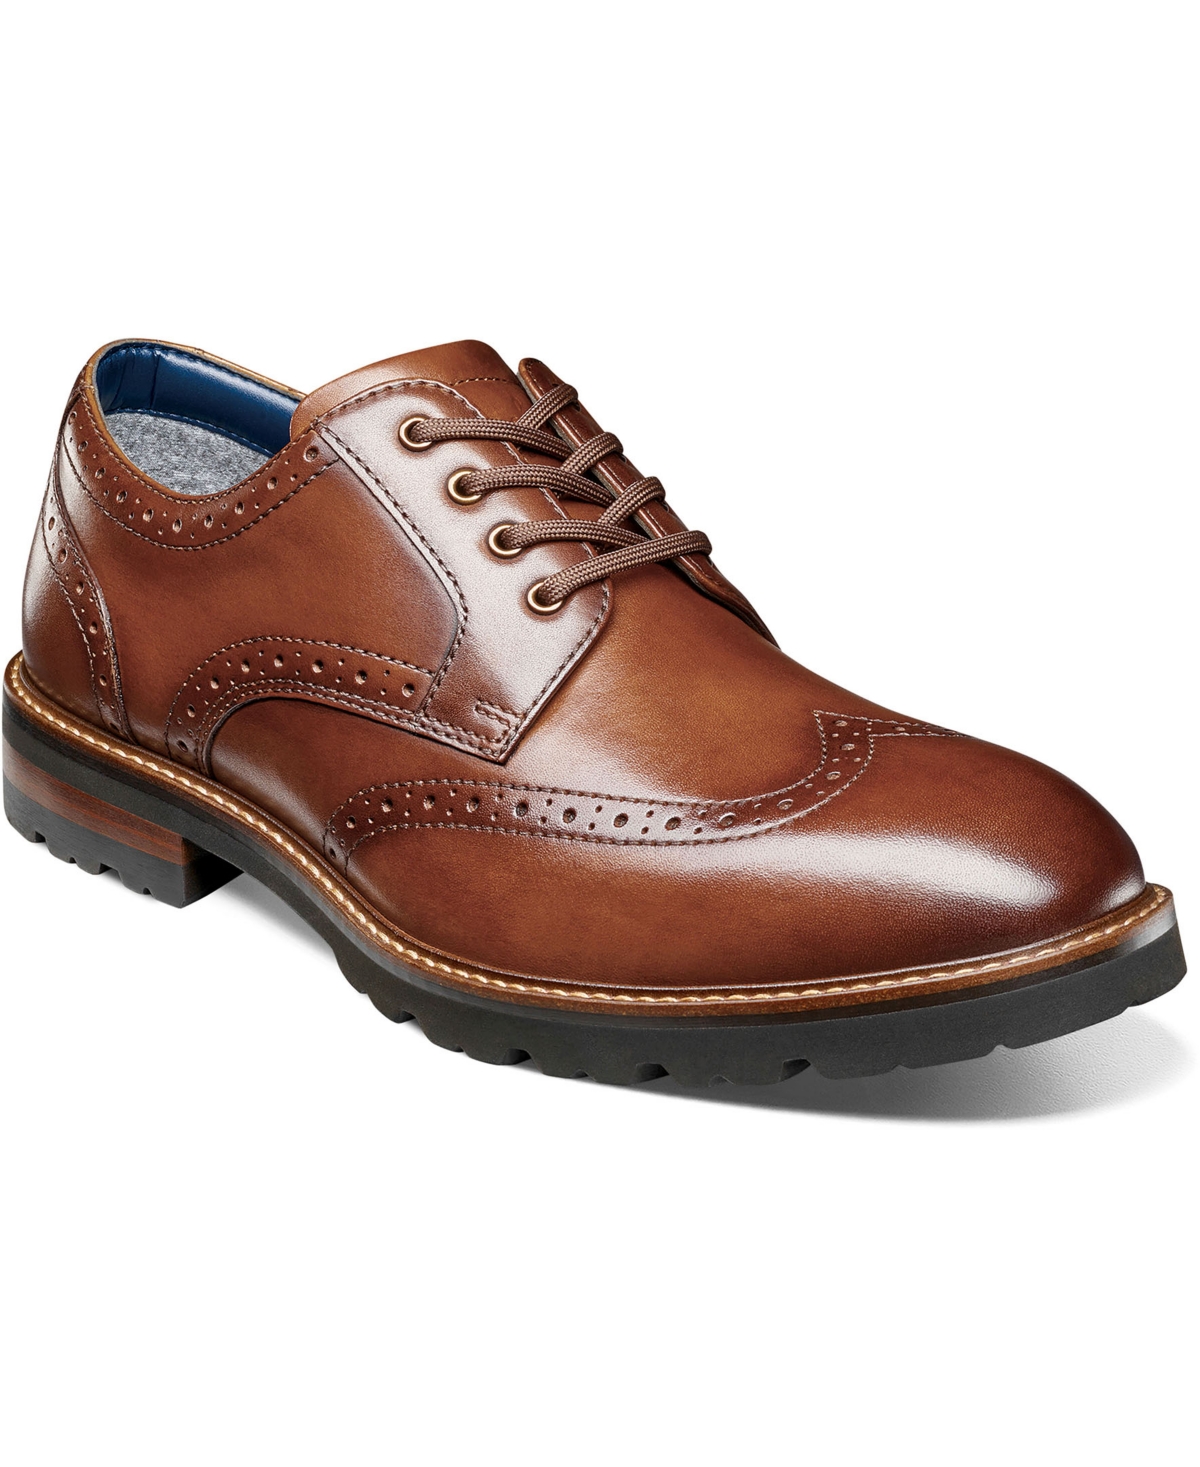 Men's Renegade Wingtip Oxford Shoes - Cognac